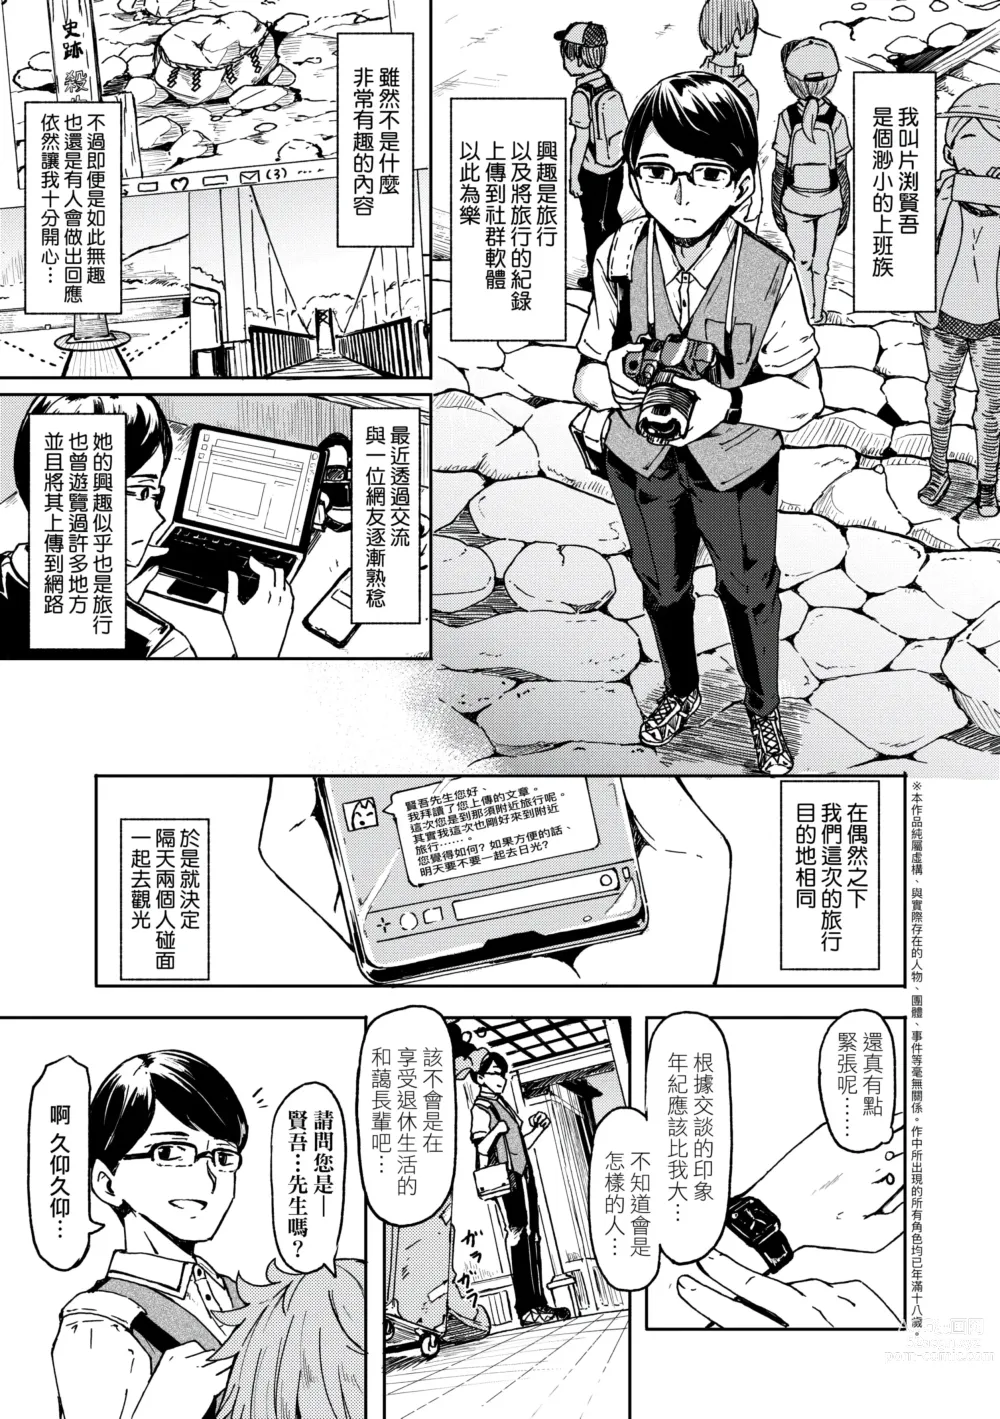 Page 5 of manga 不請自來狐嫁太陽雨 (decensored)